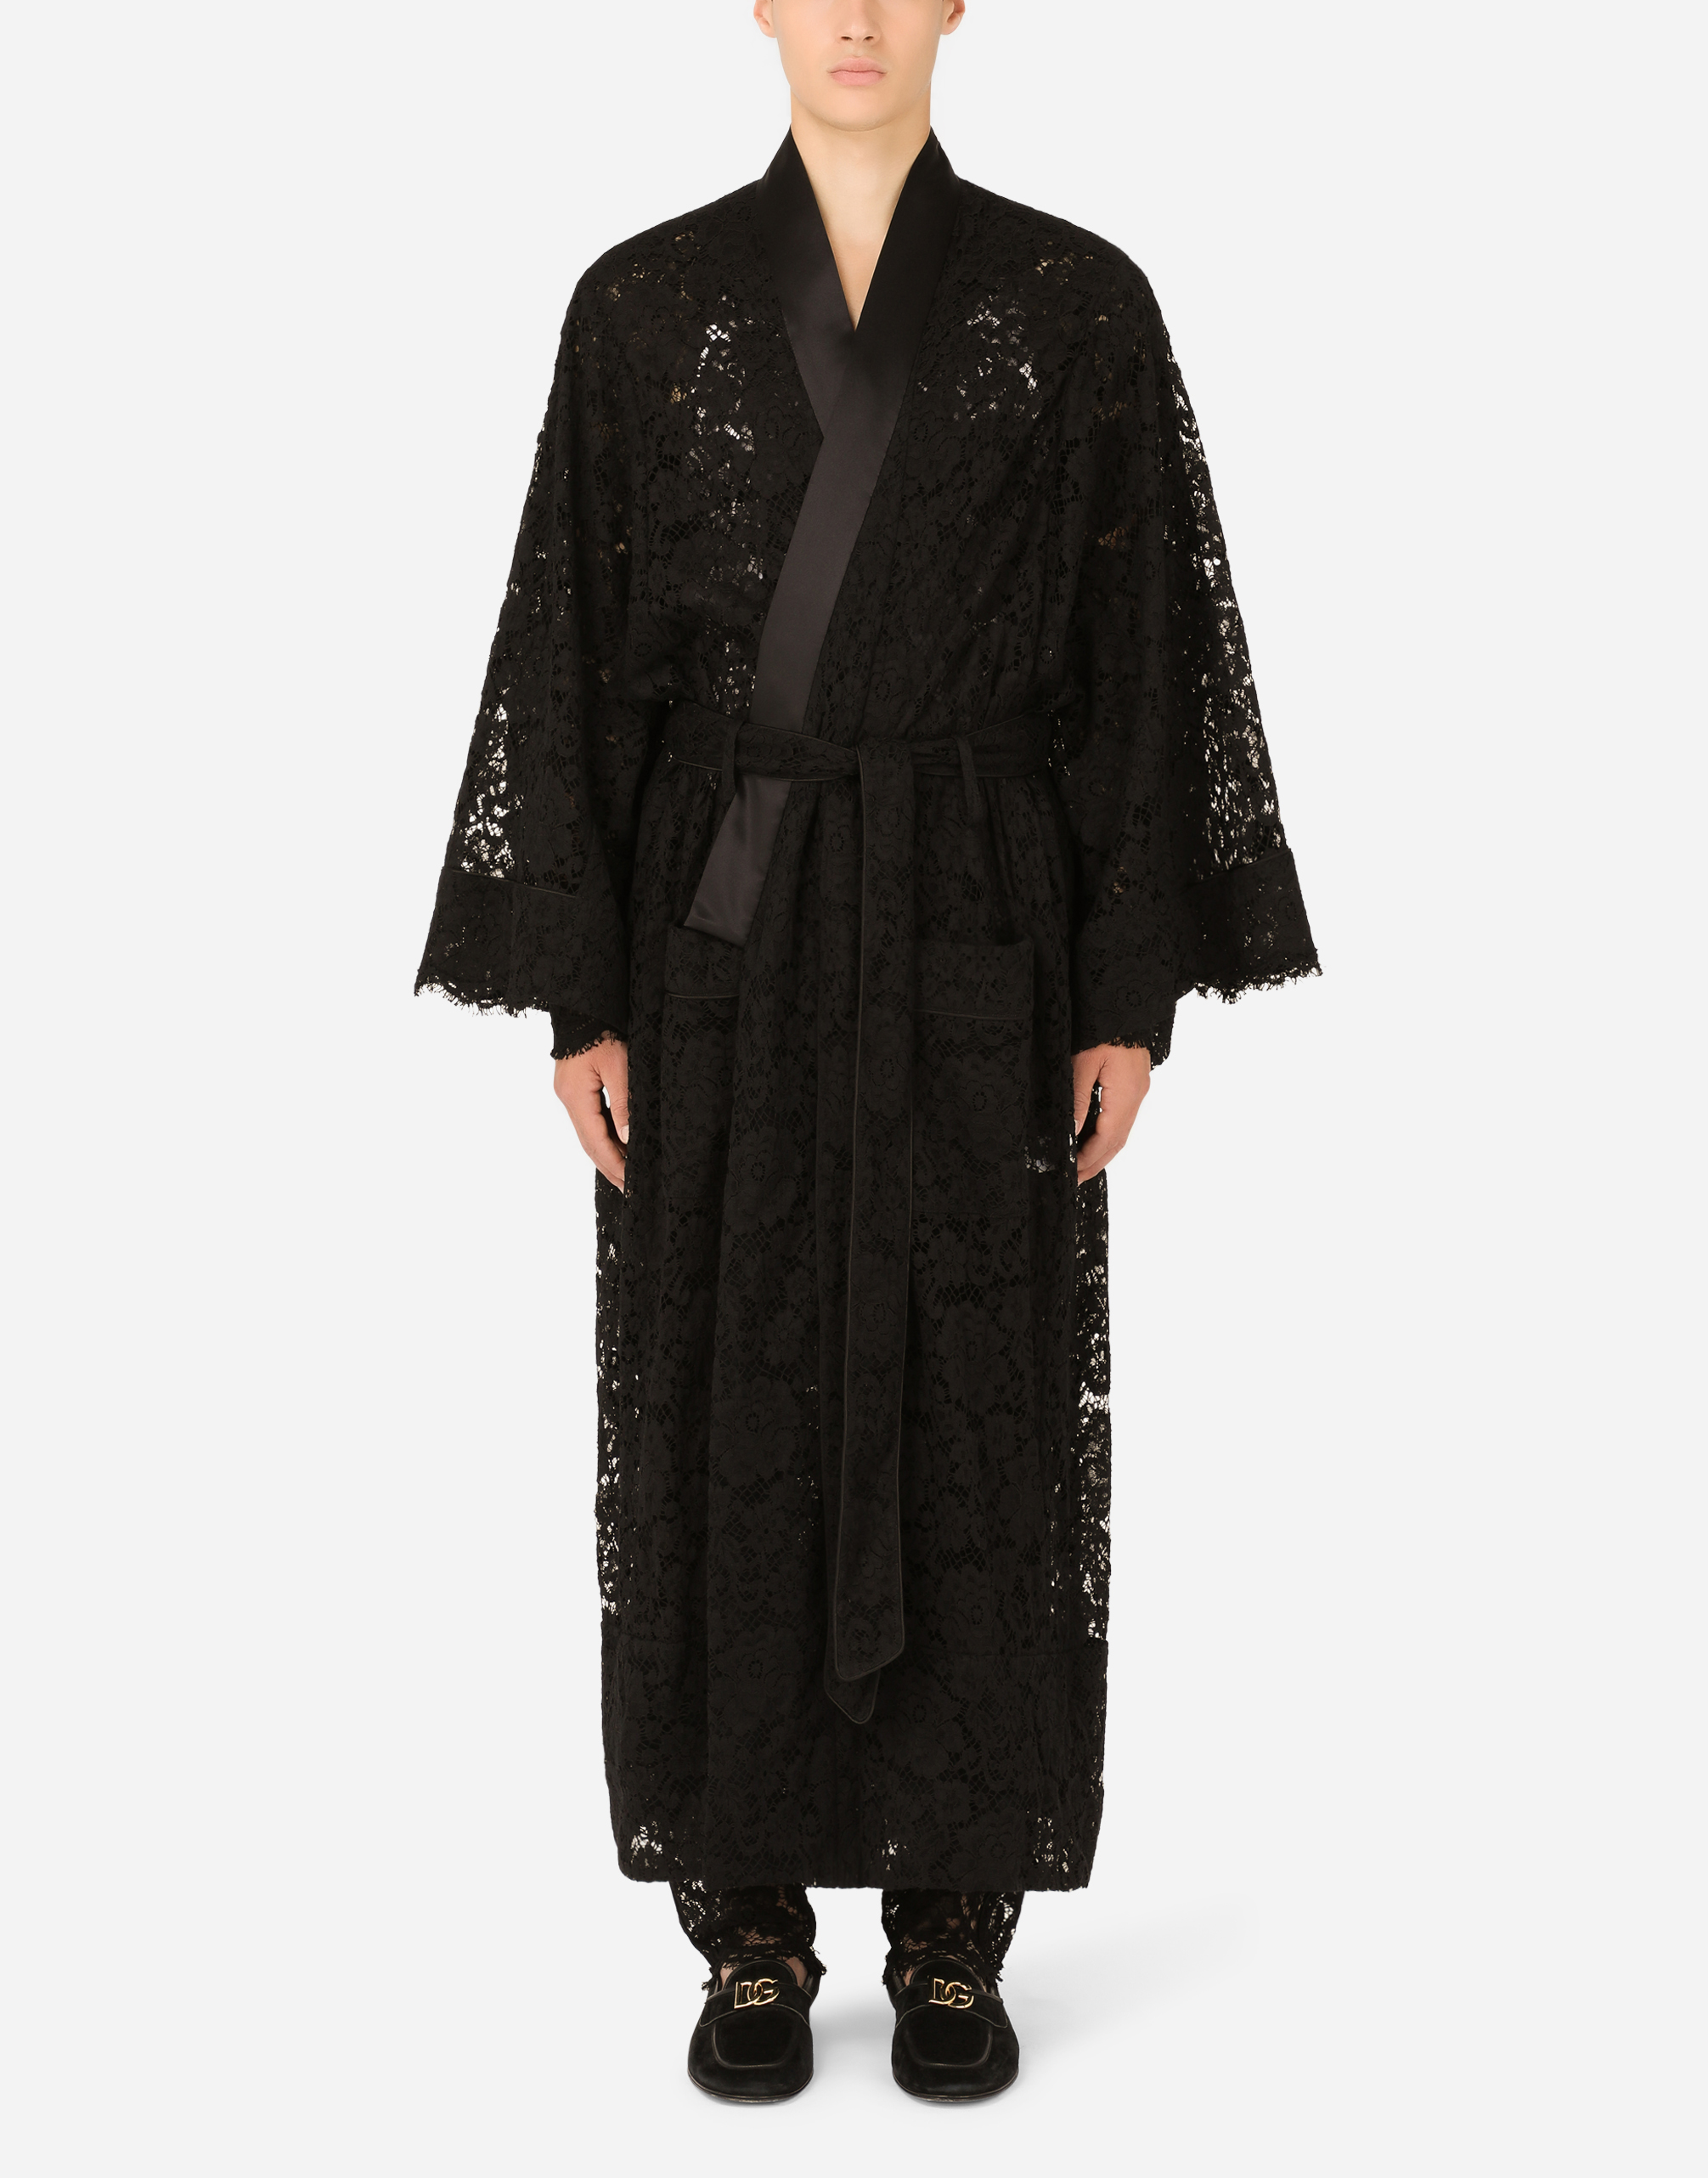 Lace robe in Black